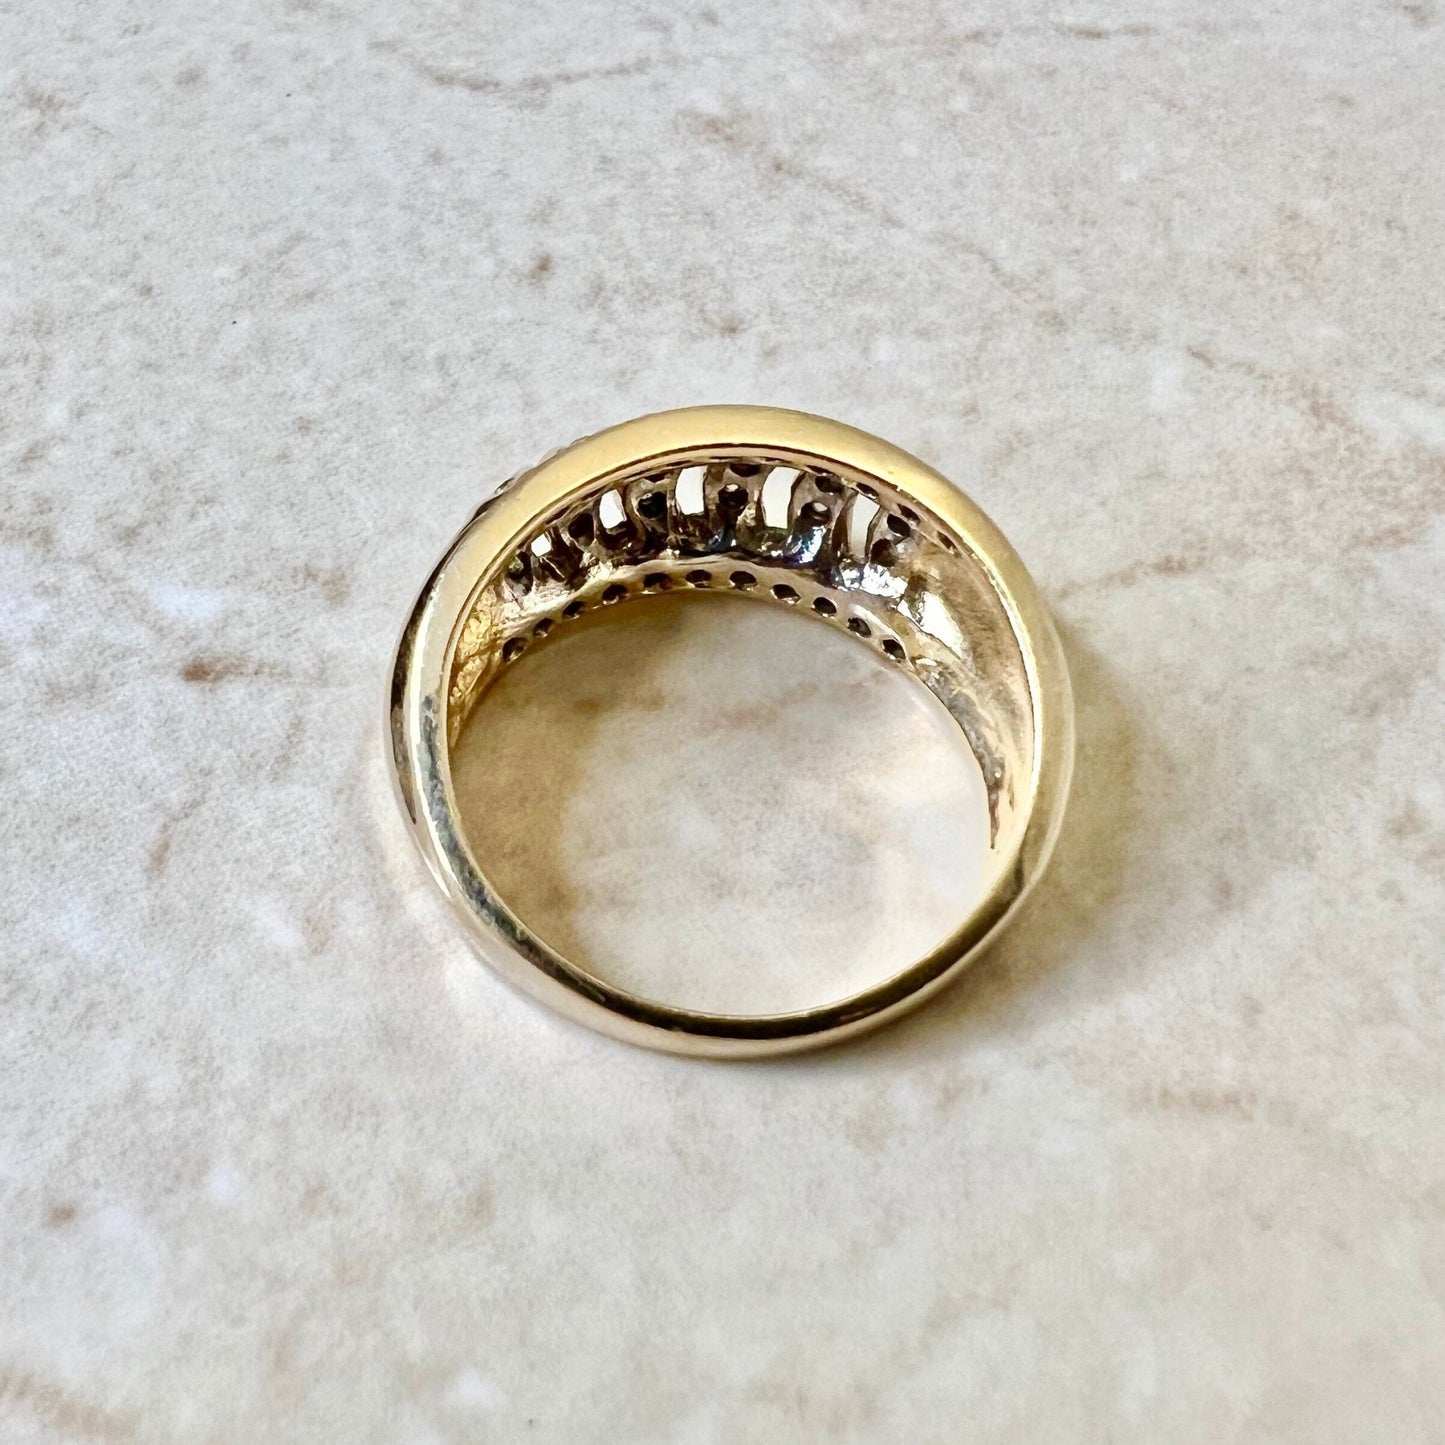 Vintage 14K Diamond Dome Band Ring - Yellow Gold - Diamond Cocktail Ring - Holiday Gift - Birthday Gift - Diamond Wedding Ring - Size 6.25